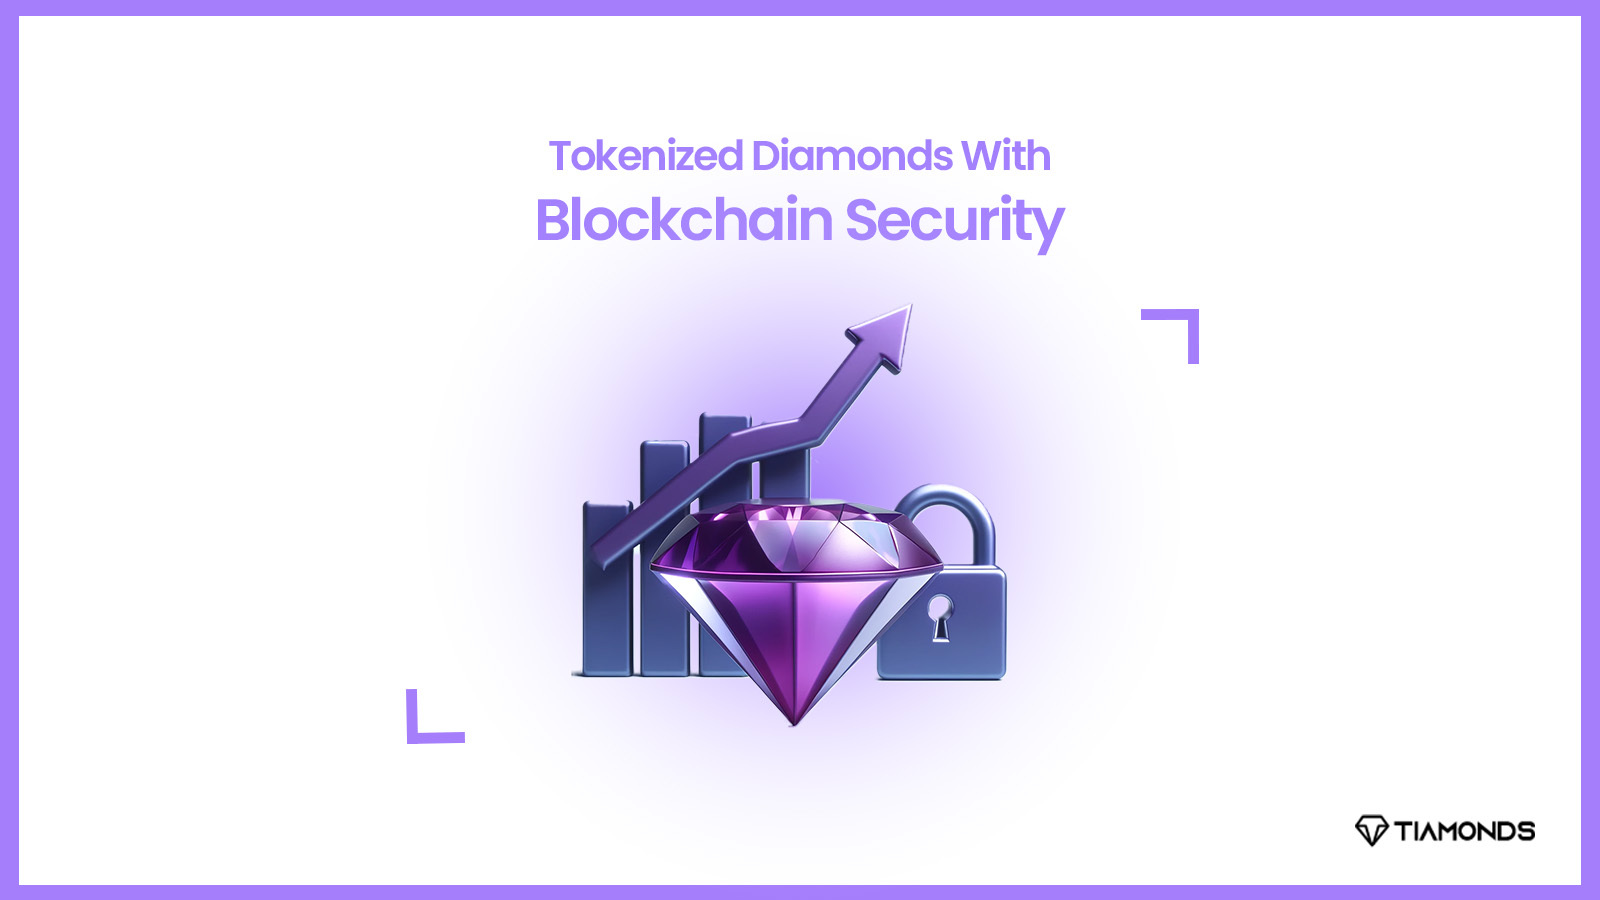 Enhance Traceability of Tokenized Diamonds with Tokenization